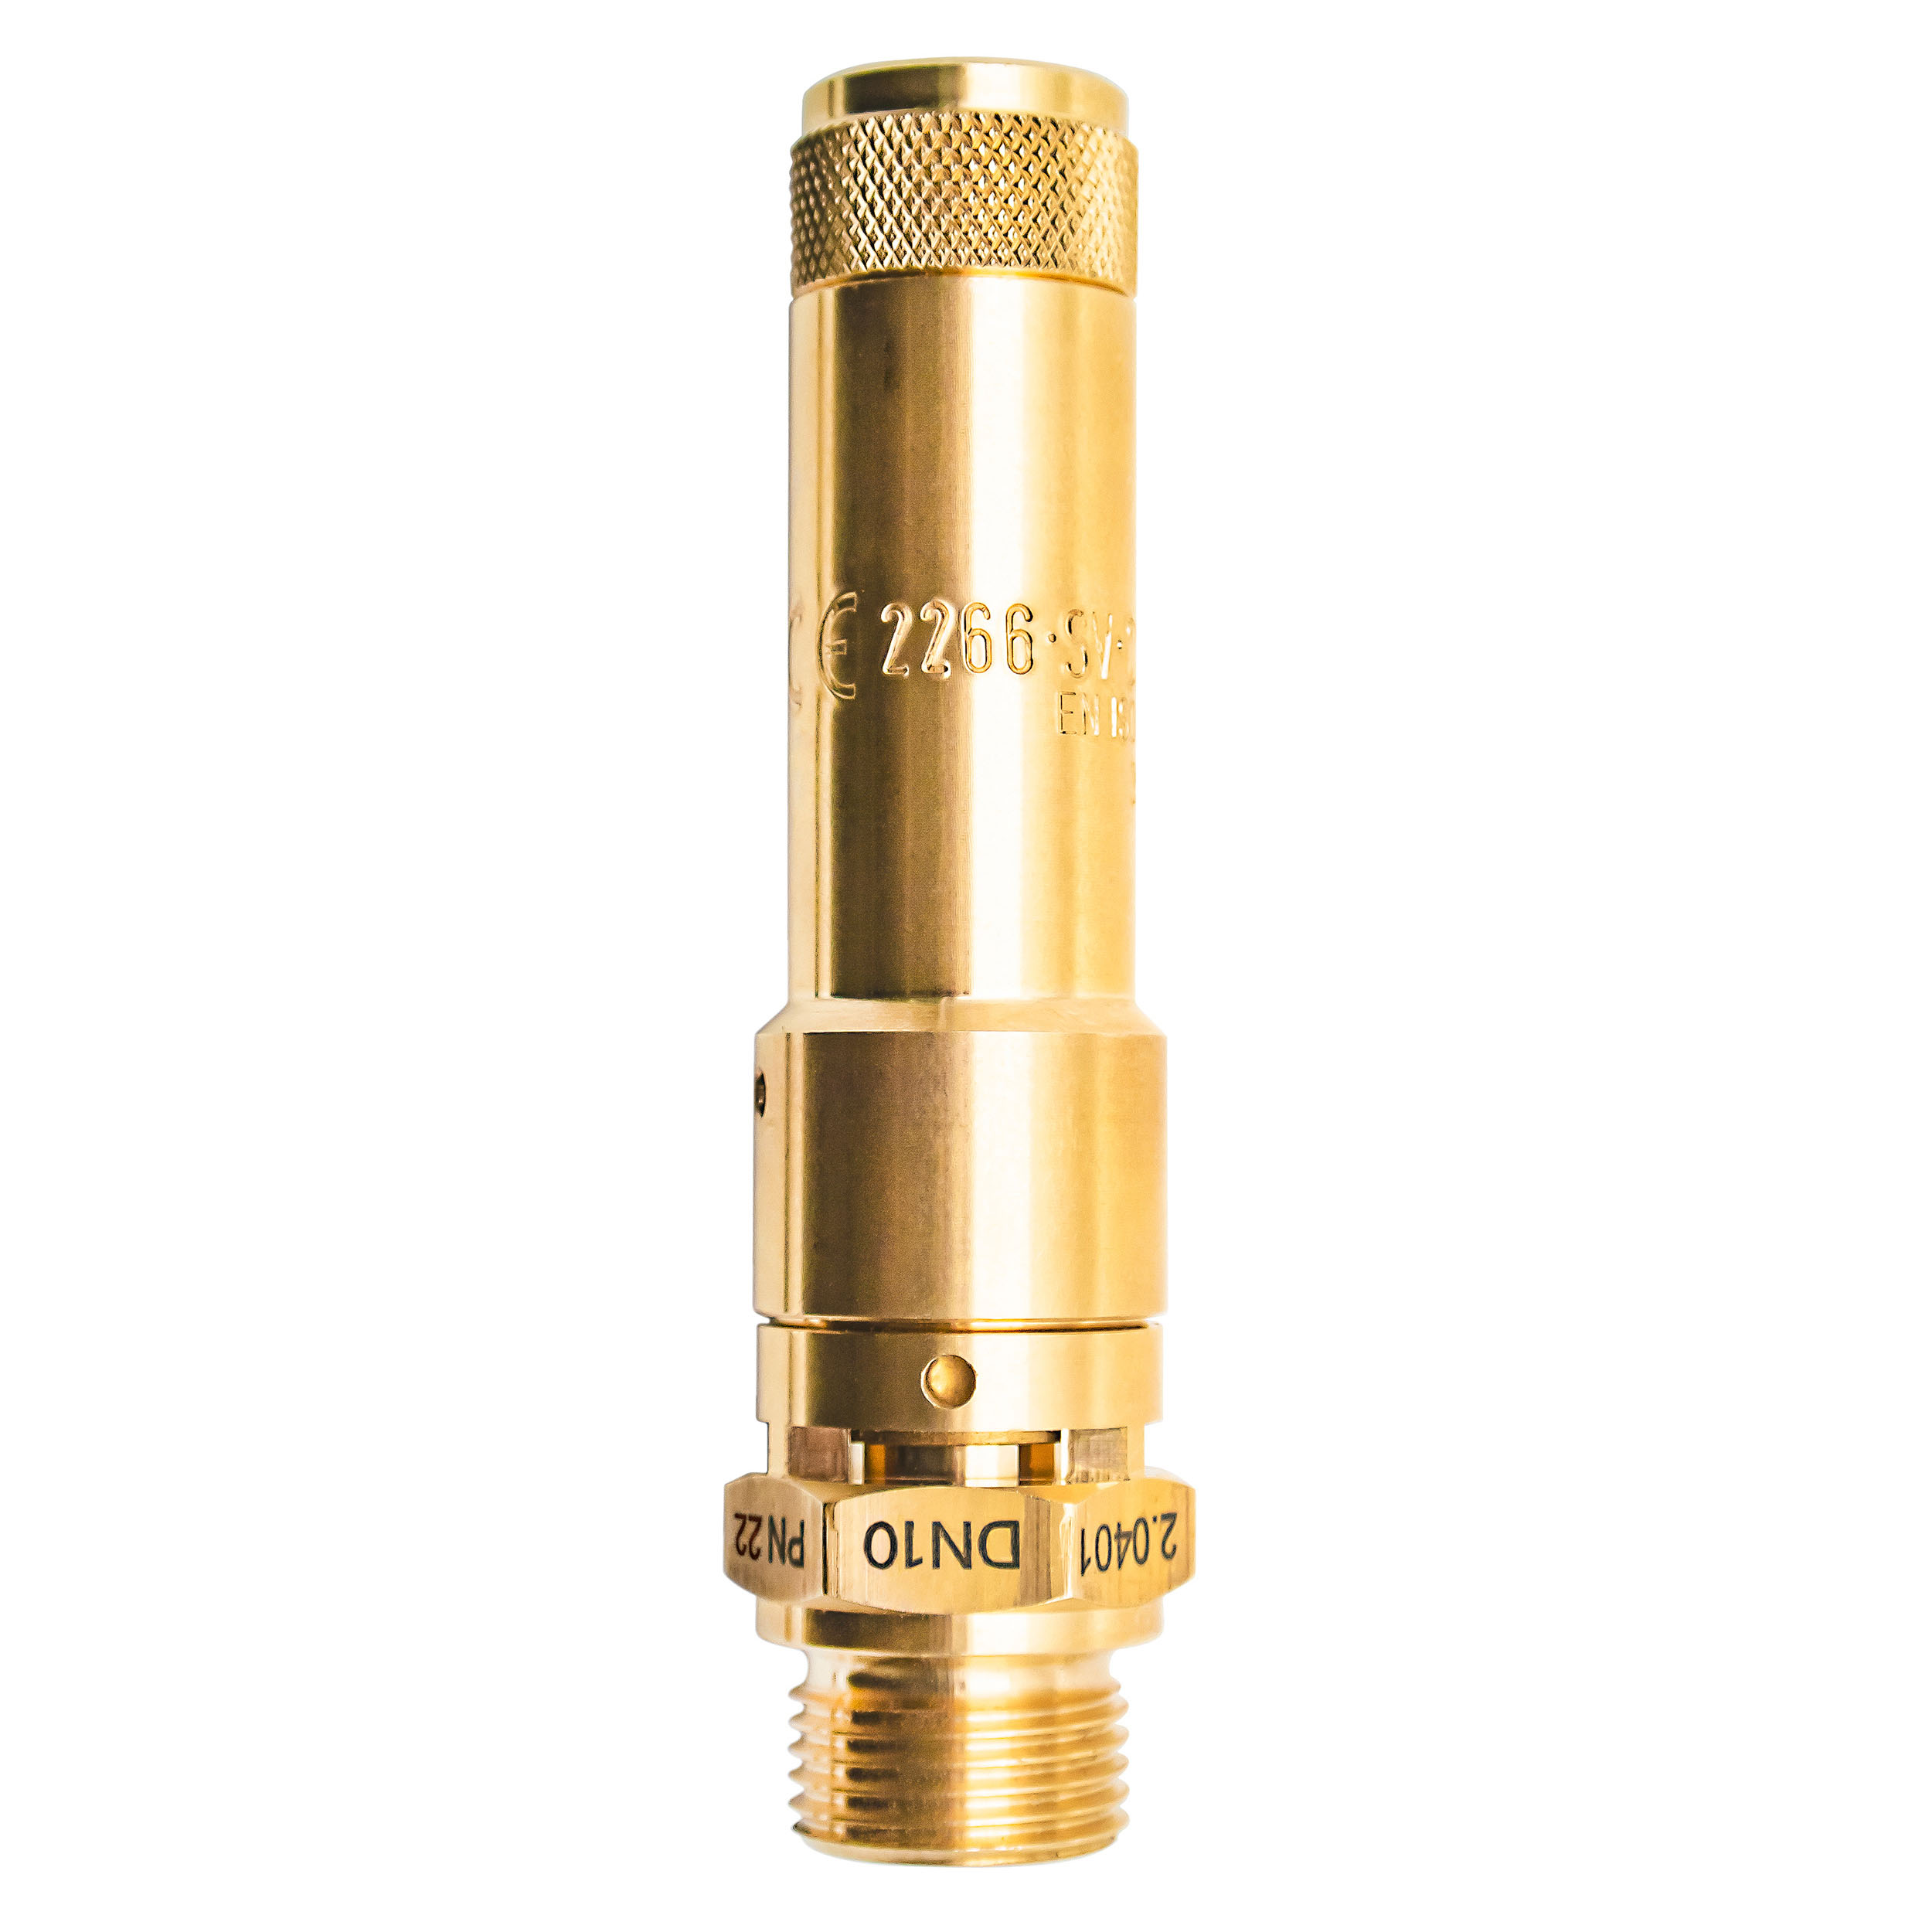 Component-tested safety valve DN 10, G¾, pressure: 3.7-5 bar